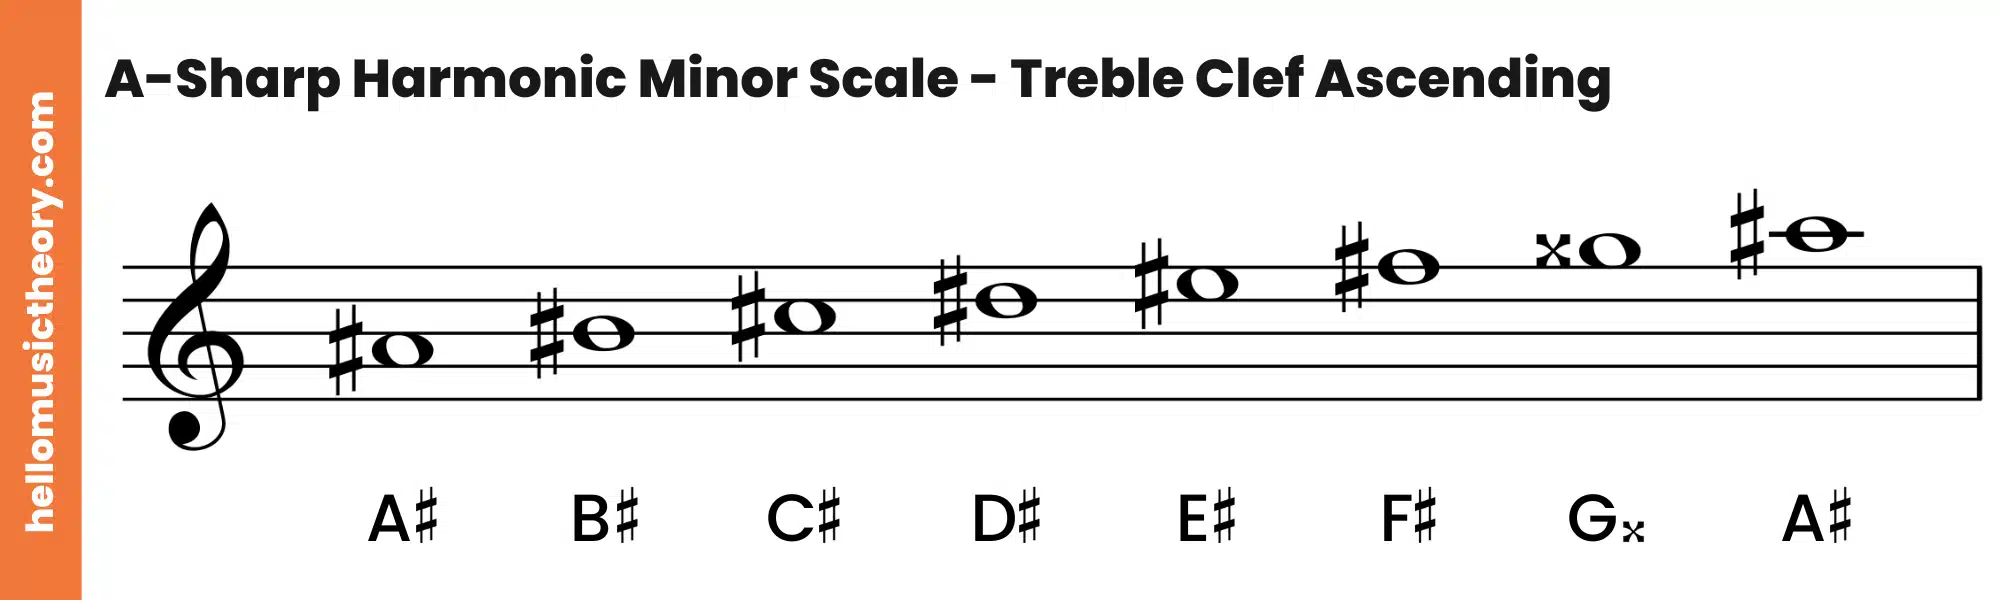 A-Sharp Harmonic Minor Scale Treble Clef Ascending